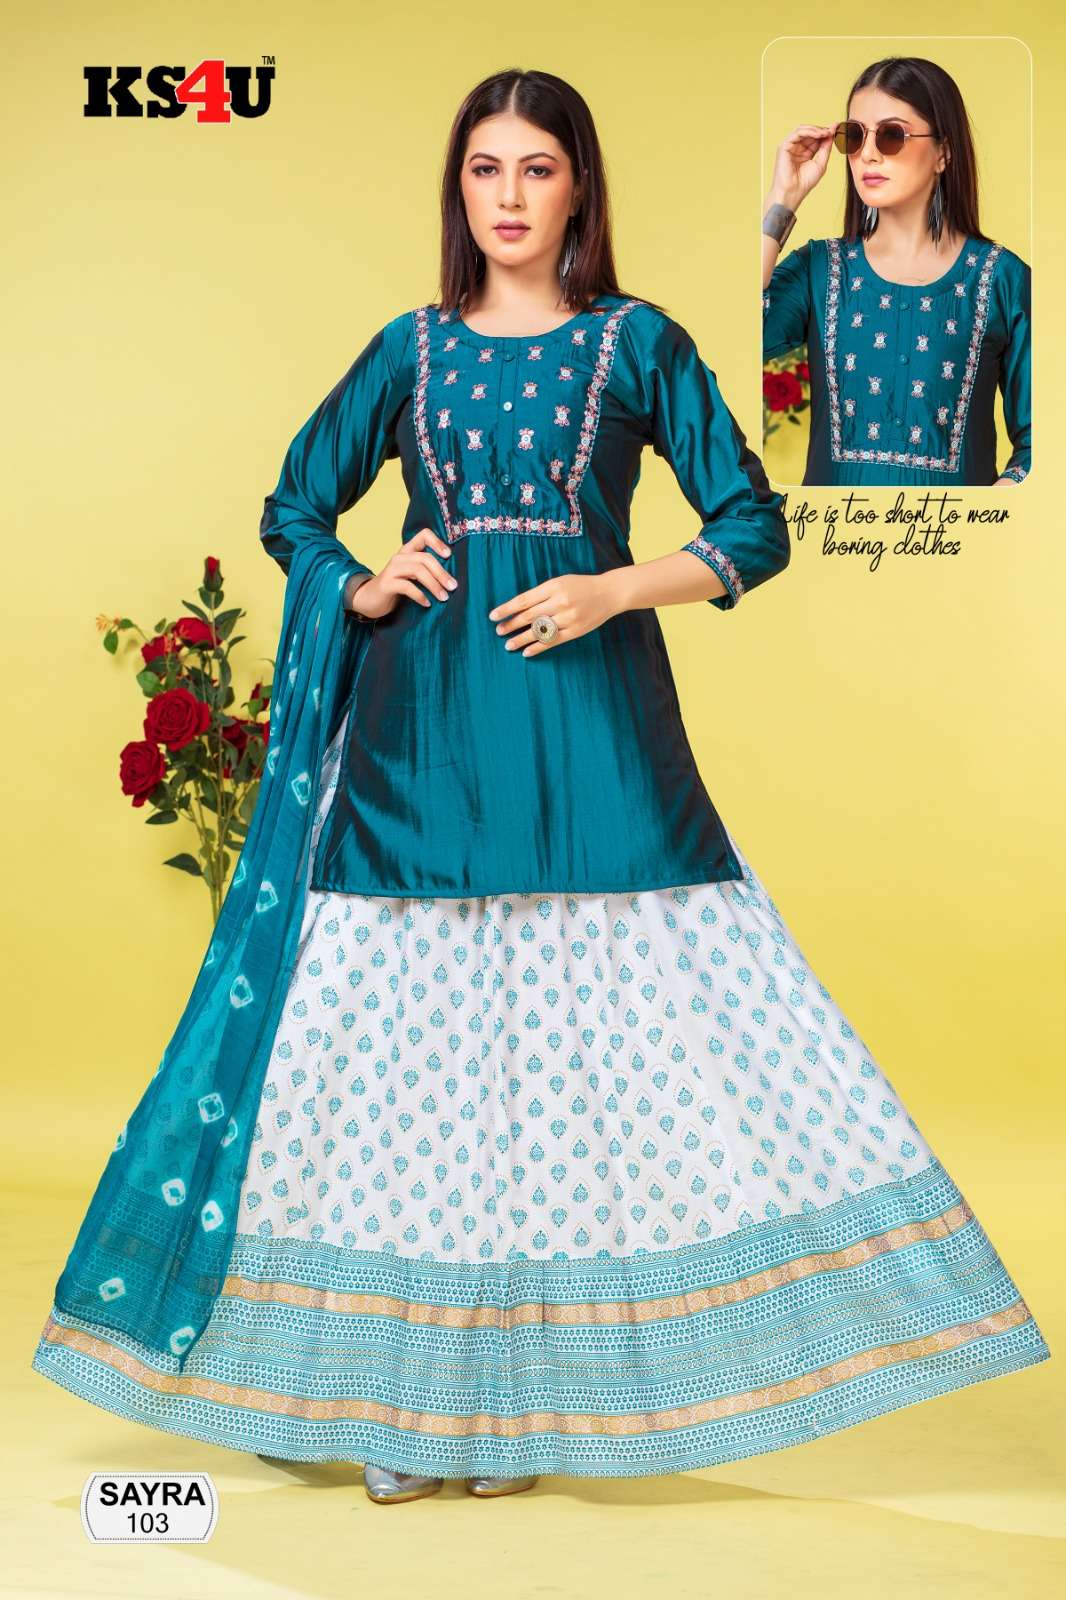 ks4u sayra skirt series designer fancy skirt set at wholesaler price surat india gujarat